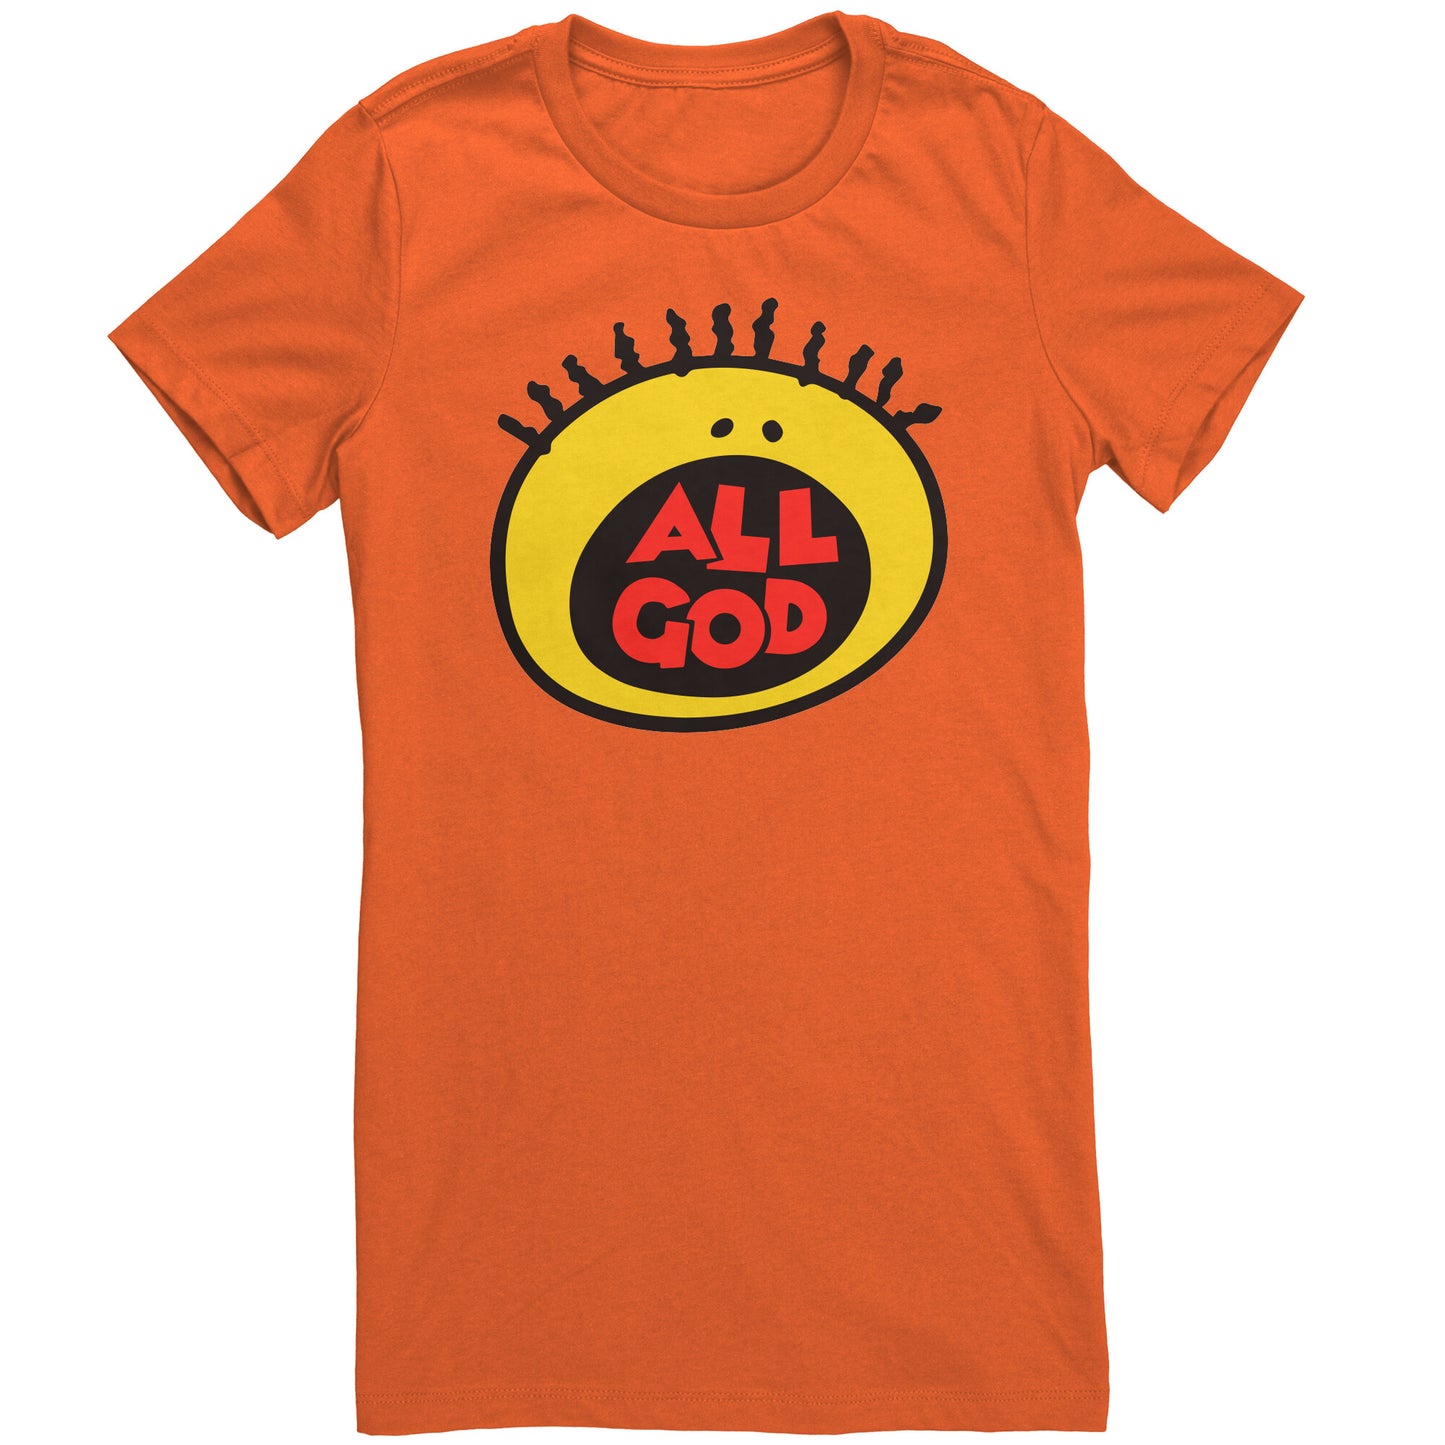 All God t-shirt